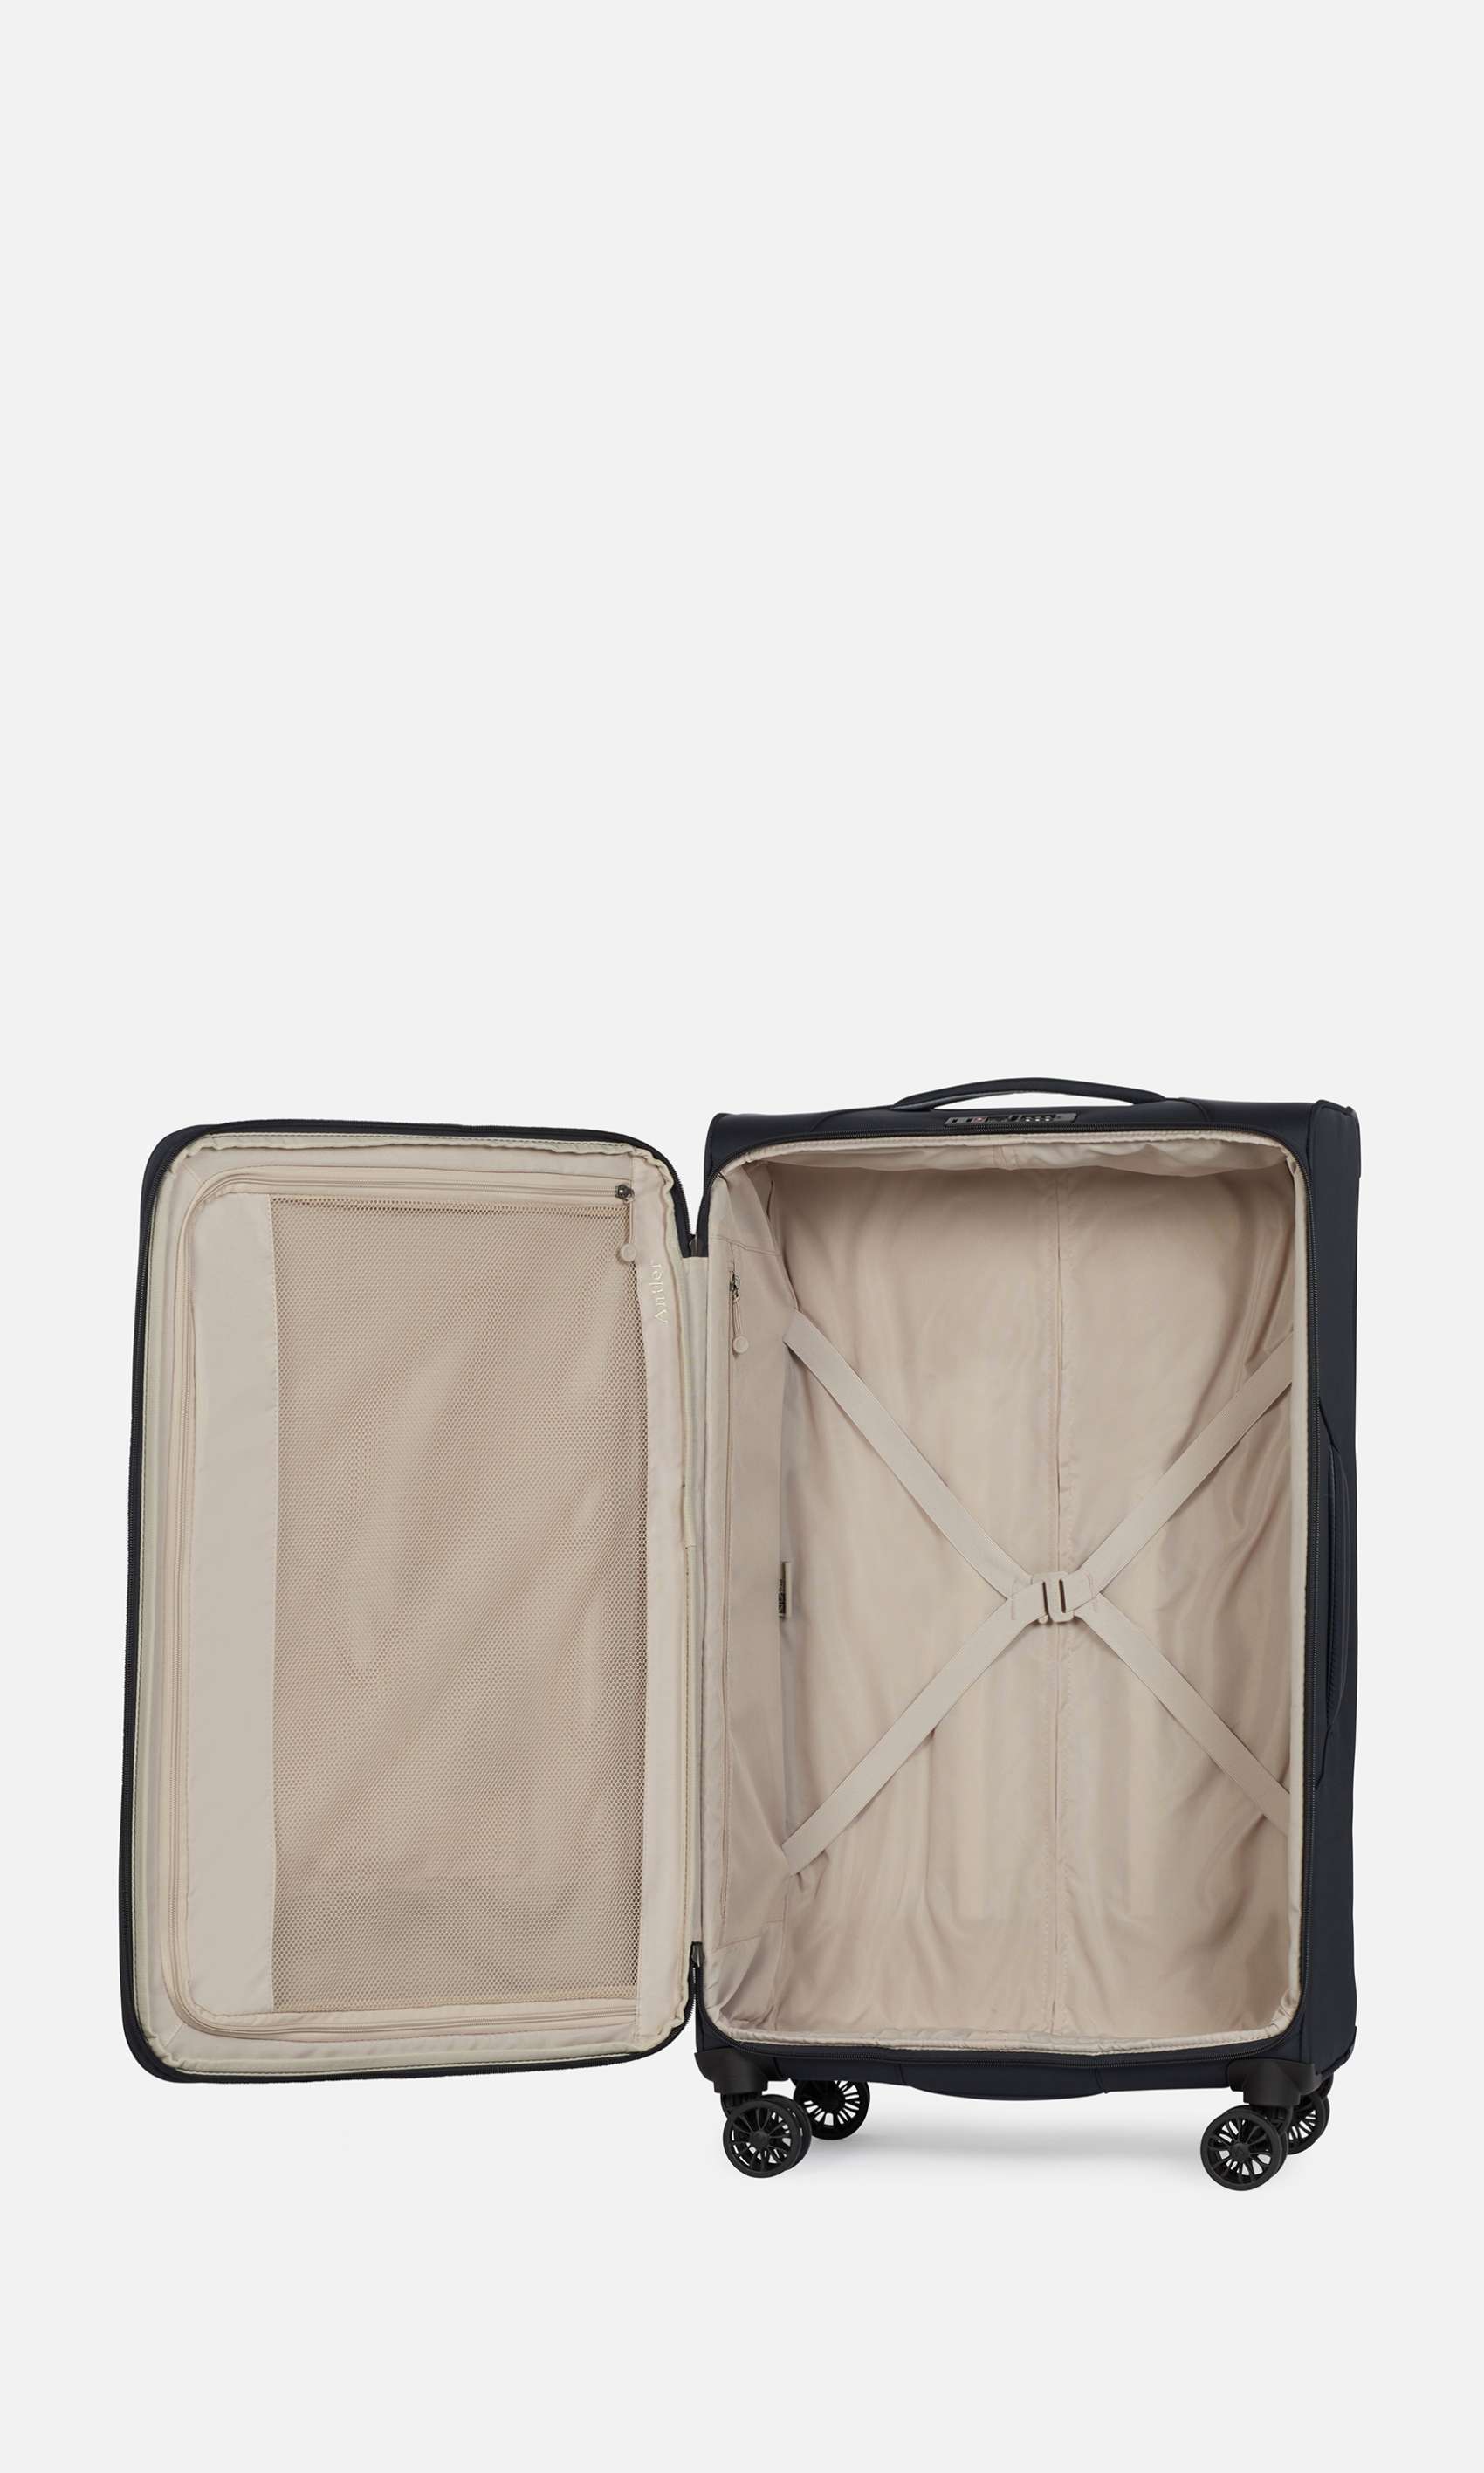 Antler Luggage -  Brixham set in navy - Soft Suitcases Brixham Set of 3 Suitcases Navy | Soft Suitcases | Antler 